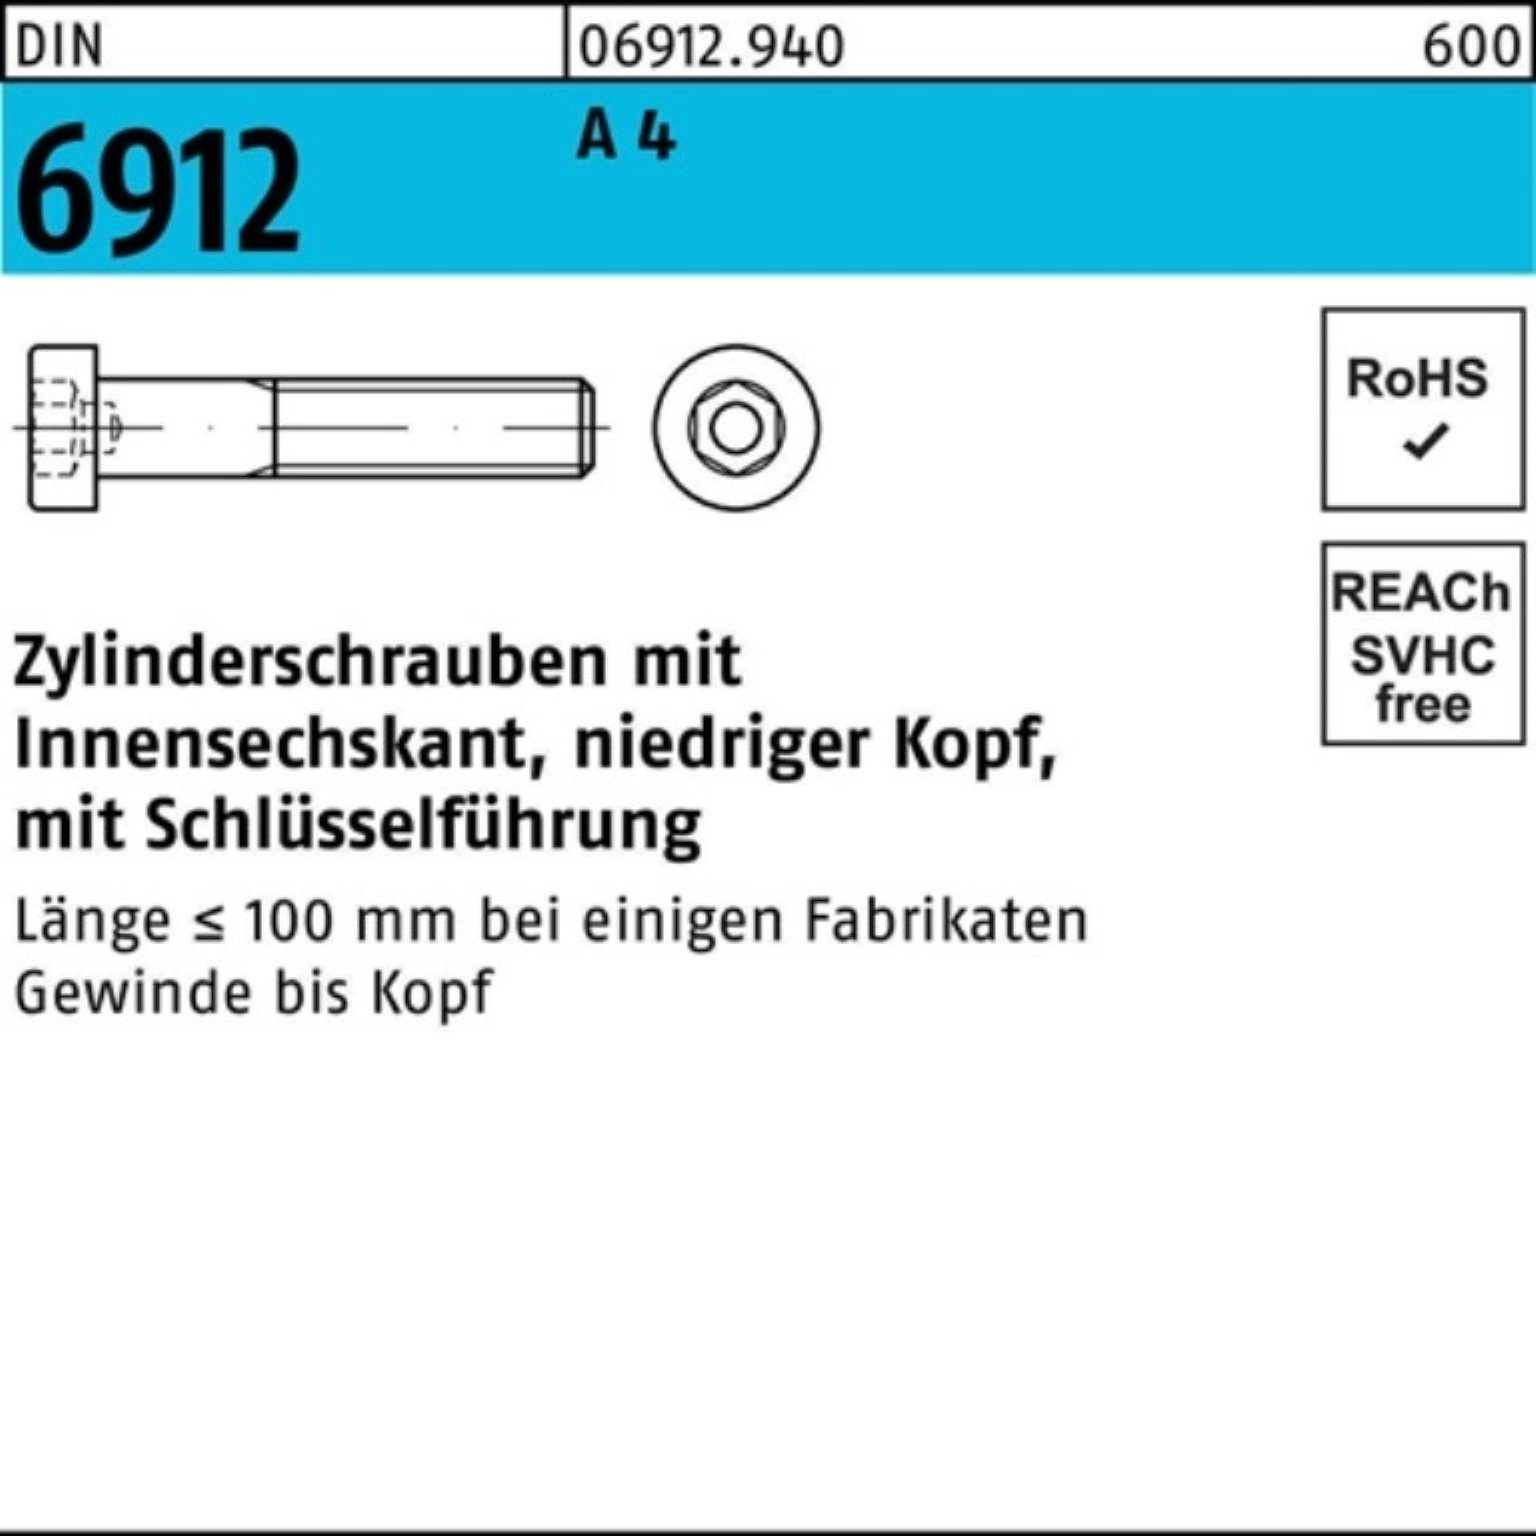 Pack 80 4 Stück A Reyher 100er DI Zylinderschraube 6912 Zylinderschraube DIN M20x 1 Innen-6kt